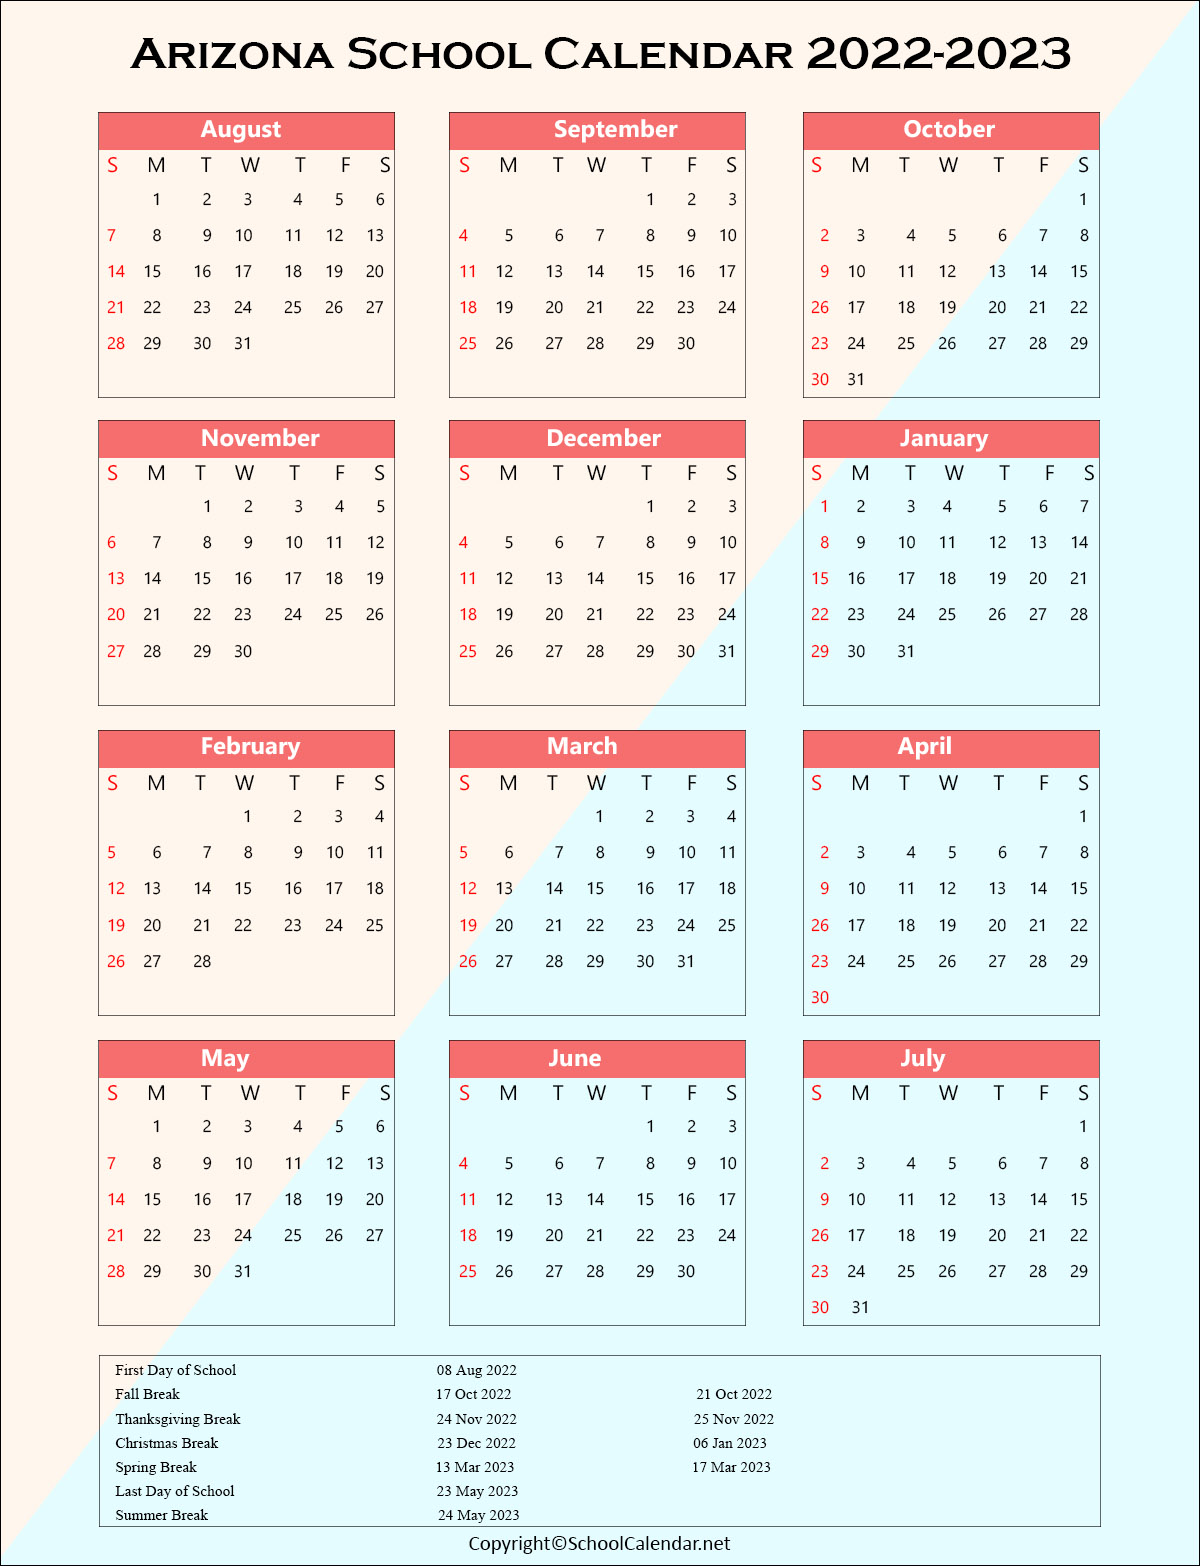 Arizona School Holiday Calendar 2022